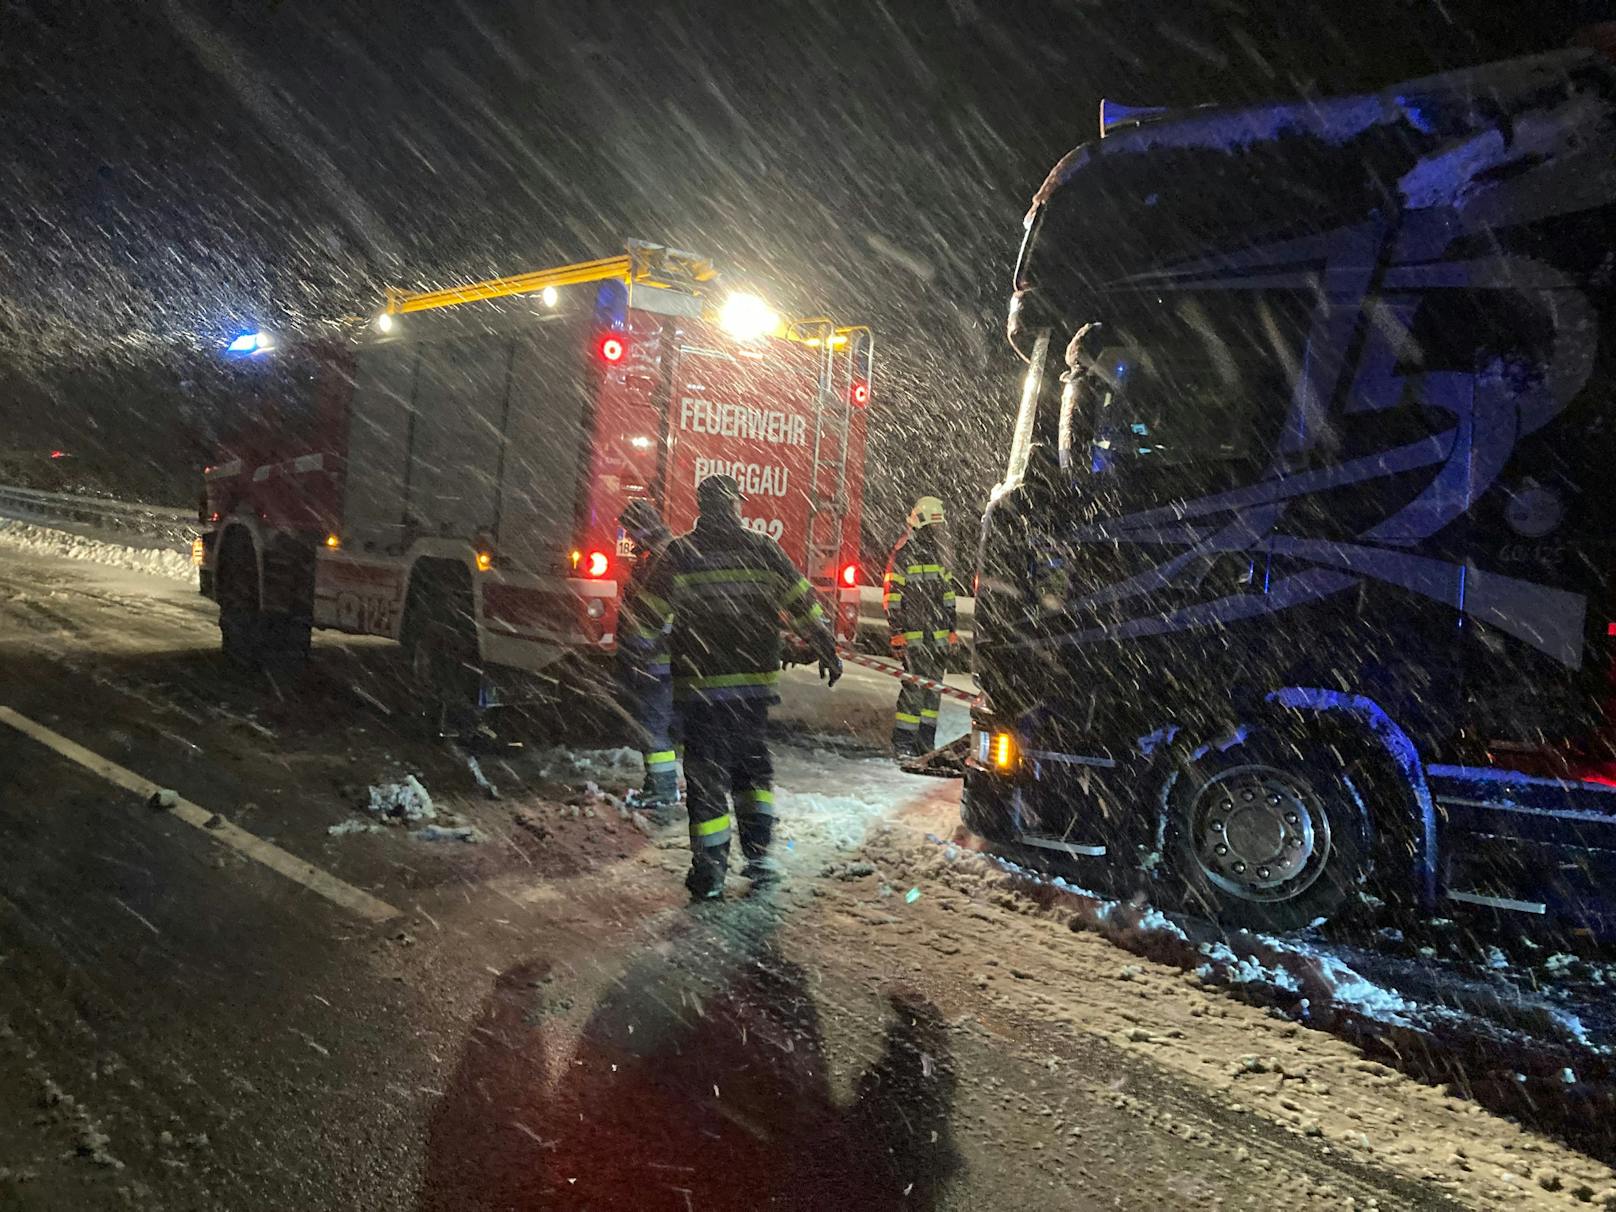 Extremes Schnee-Chaos! Lkws legen Autobahn komplett lahm